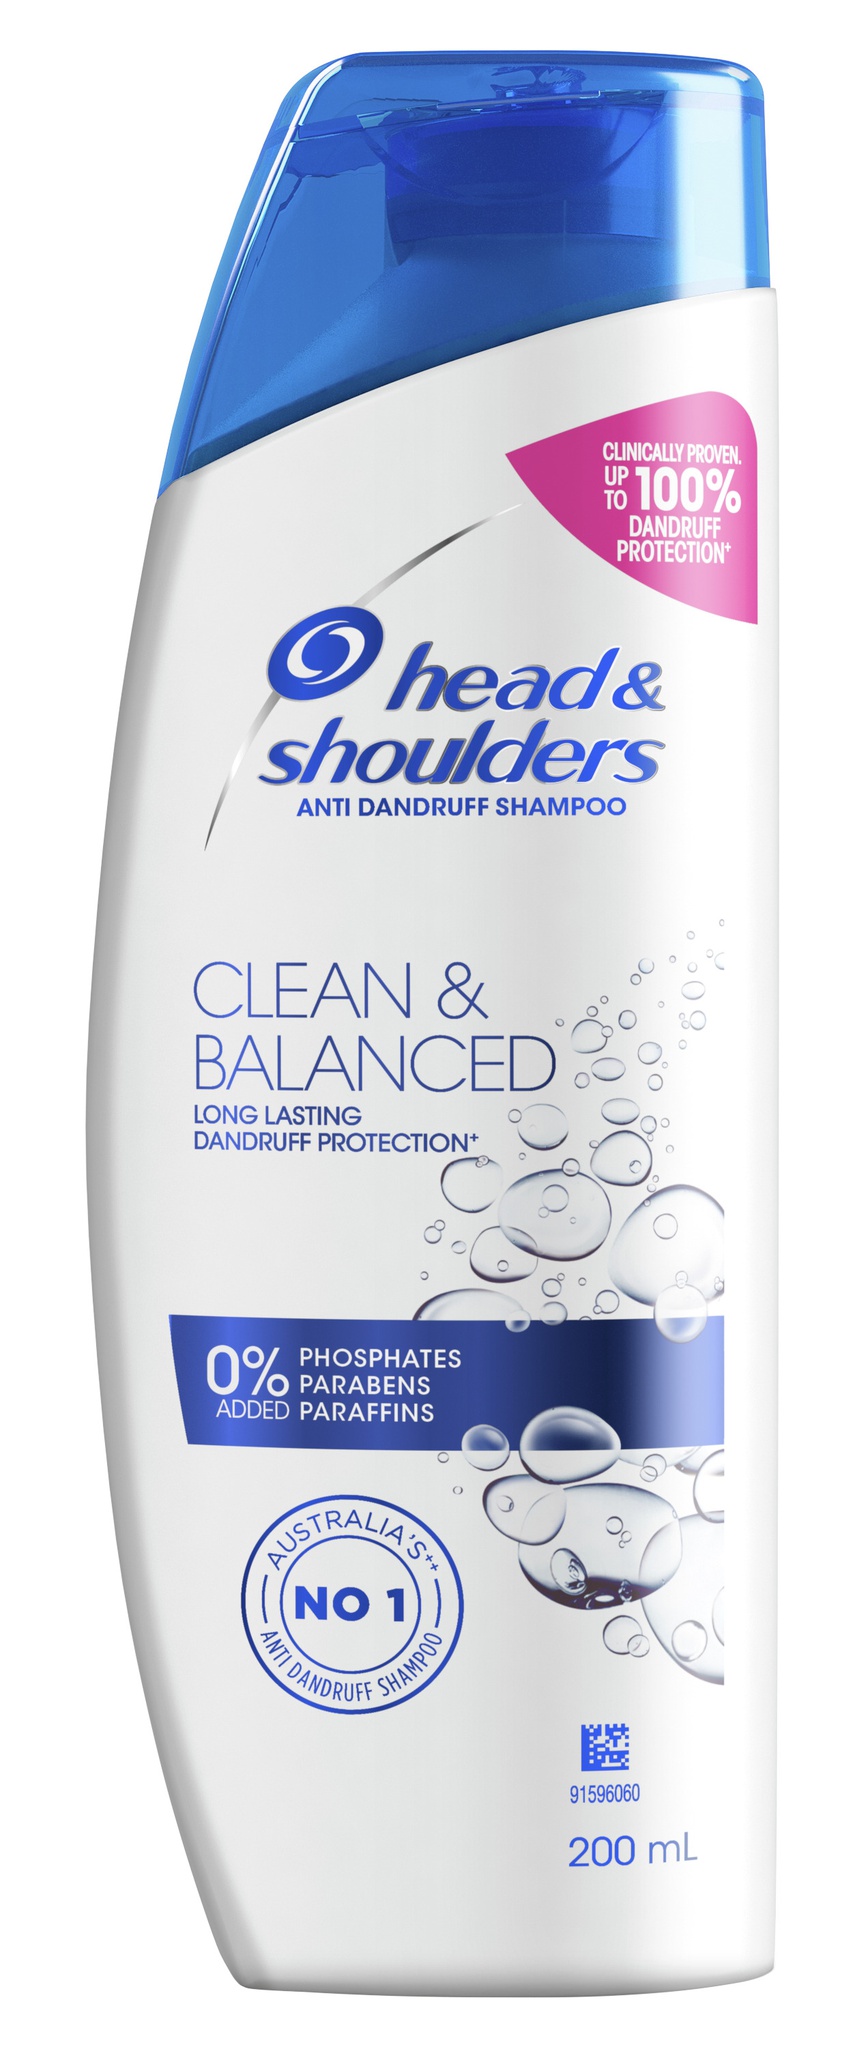 Head & Shoulders Clean & Balanced Shampoo ingredients (Explained)